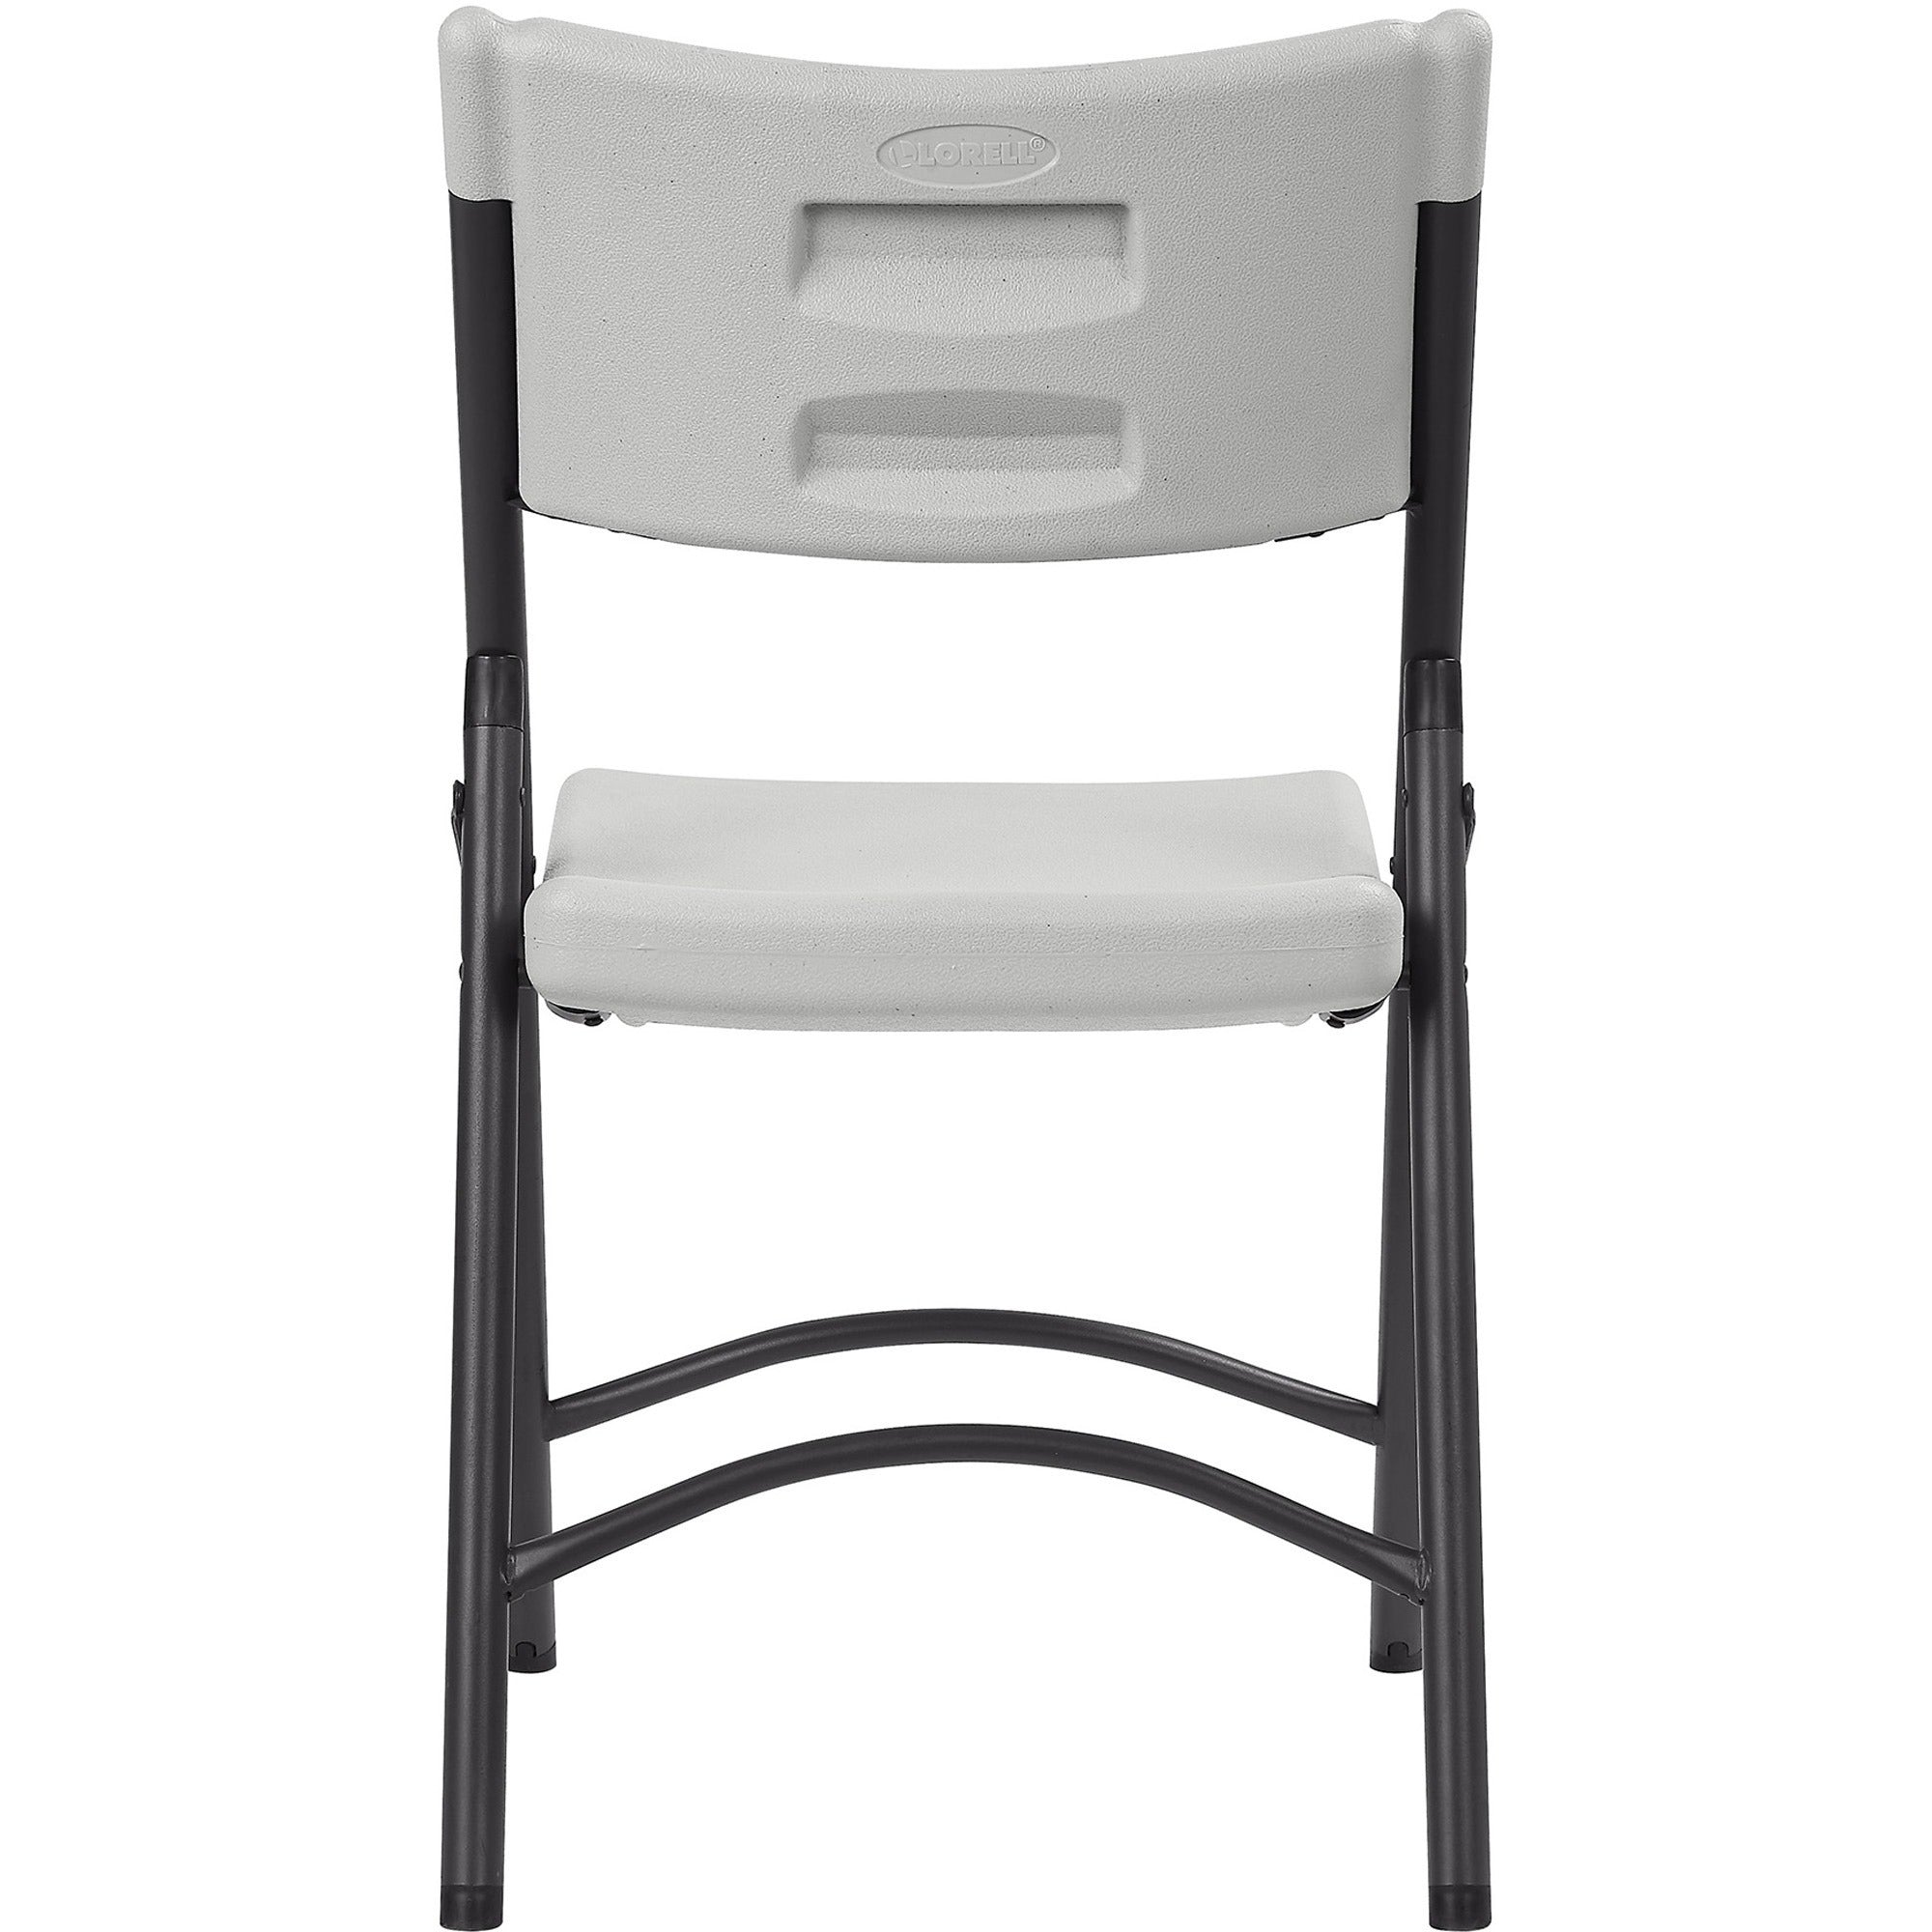 Lorell Heavy-duty Blow-Molded Folding Chairs - Light Gray Polyethylene Seat - Light Gray Polyethylene Back - Dark Gray Steel Frame - Steel, Polyethylene - 4 / Carton - 